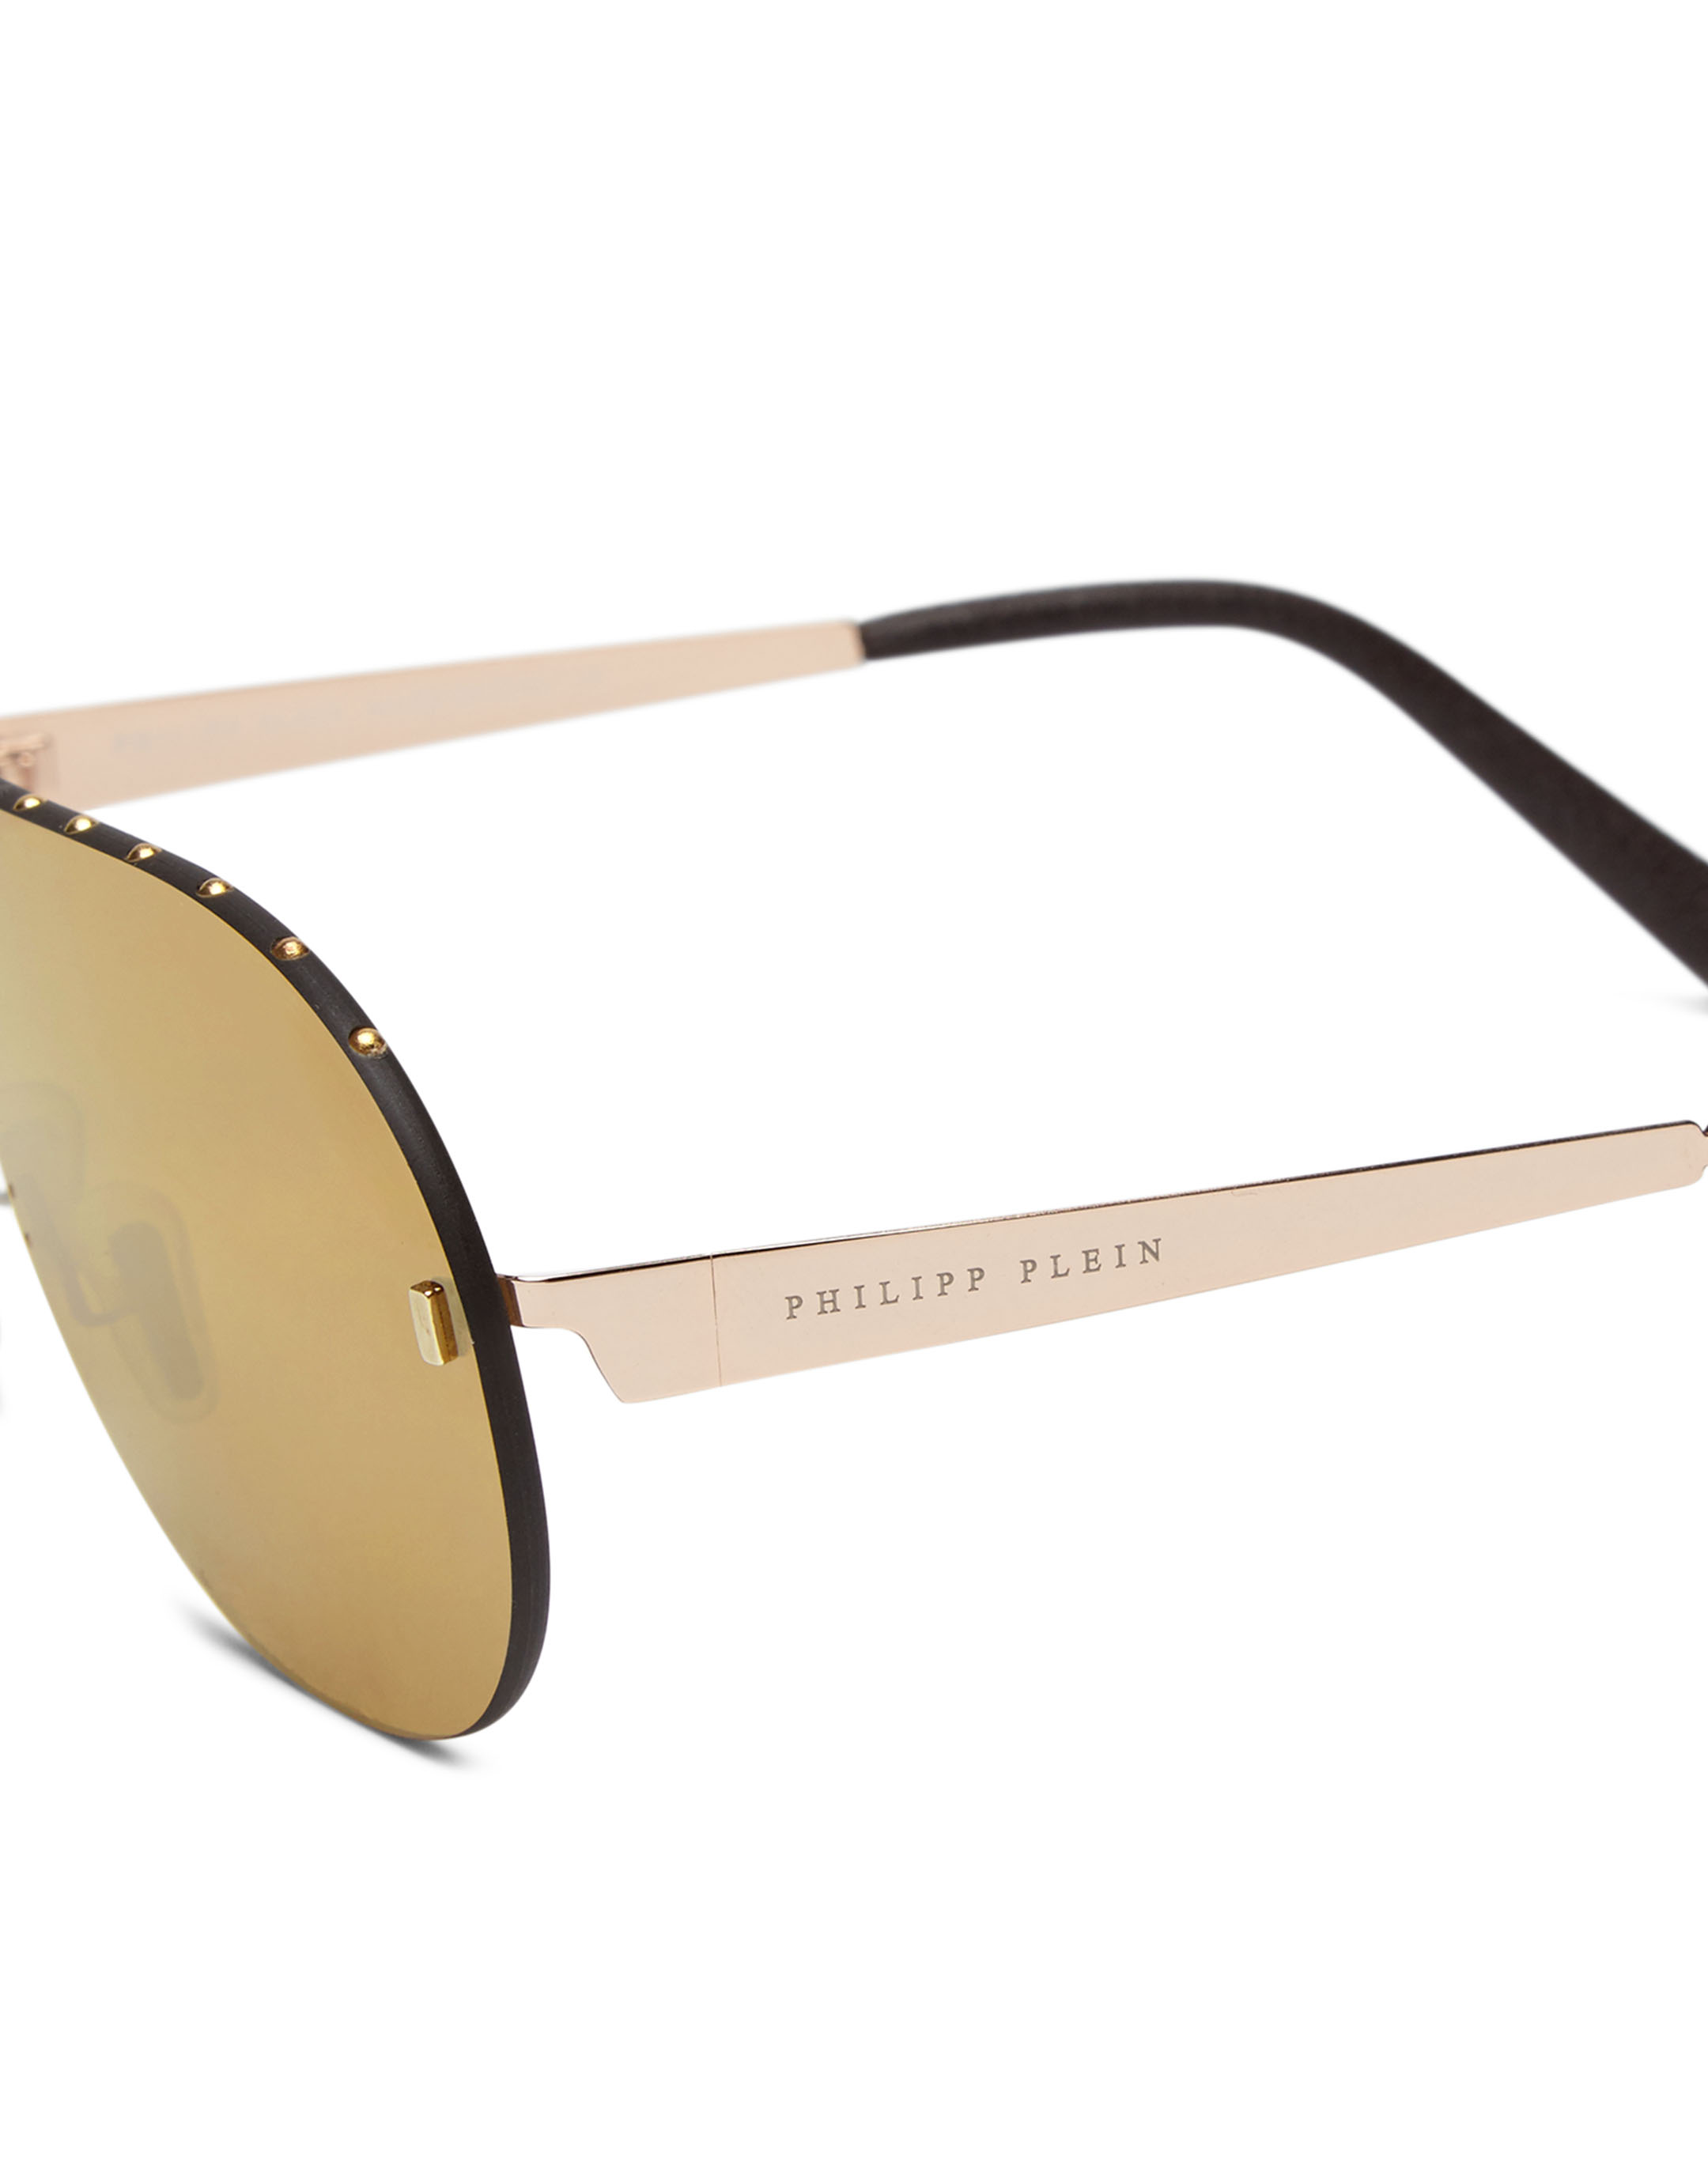 Studs Outlet Sunglasses Target | Philipp Plein